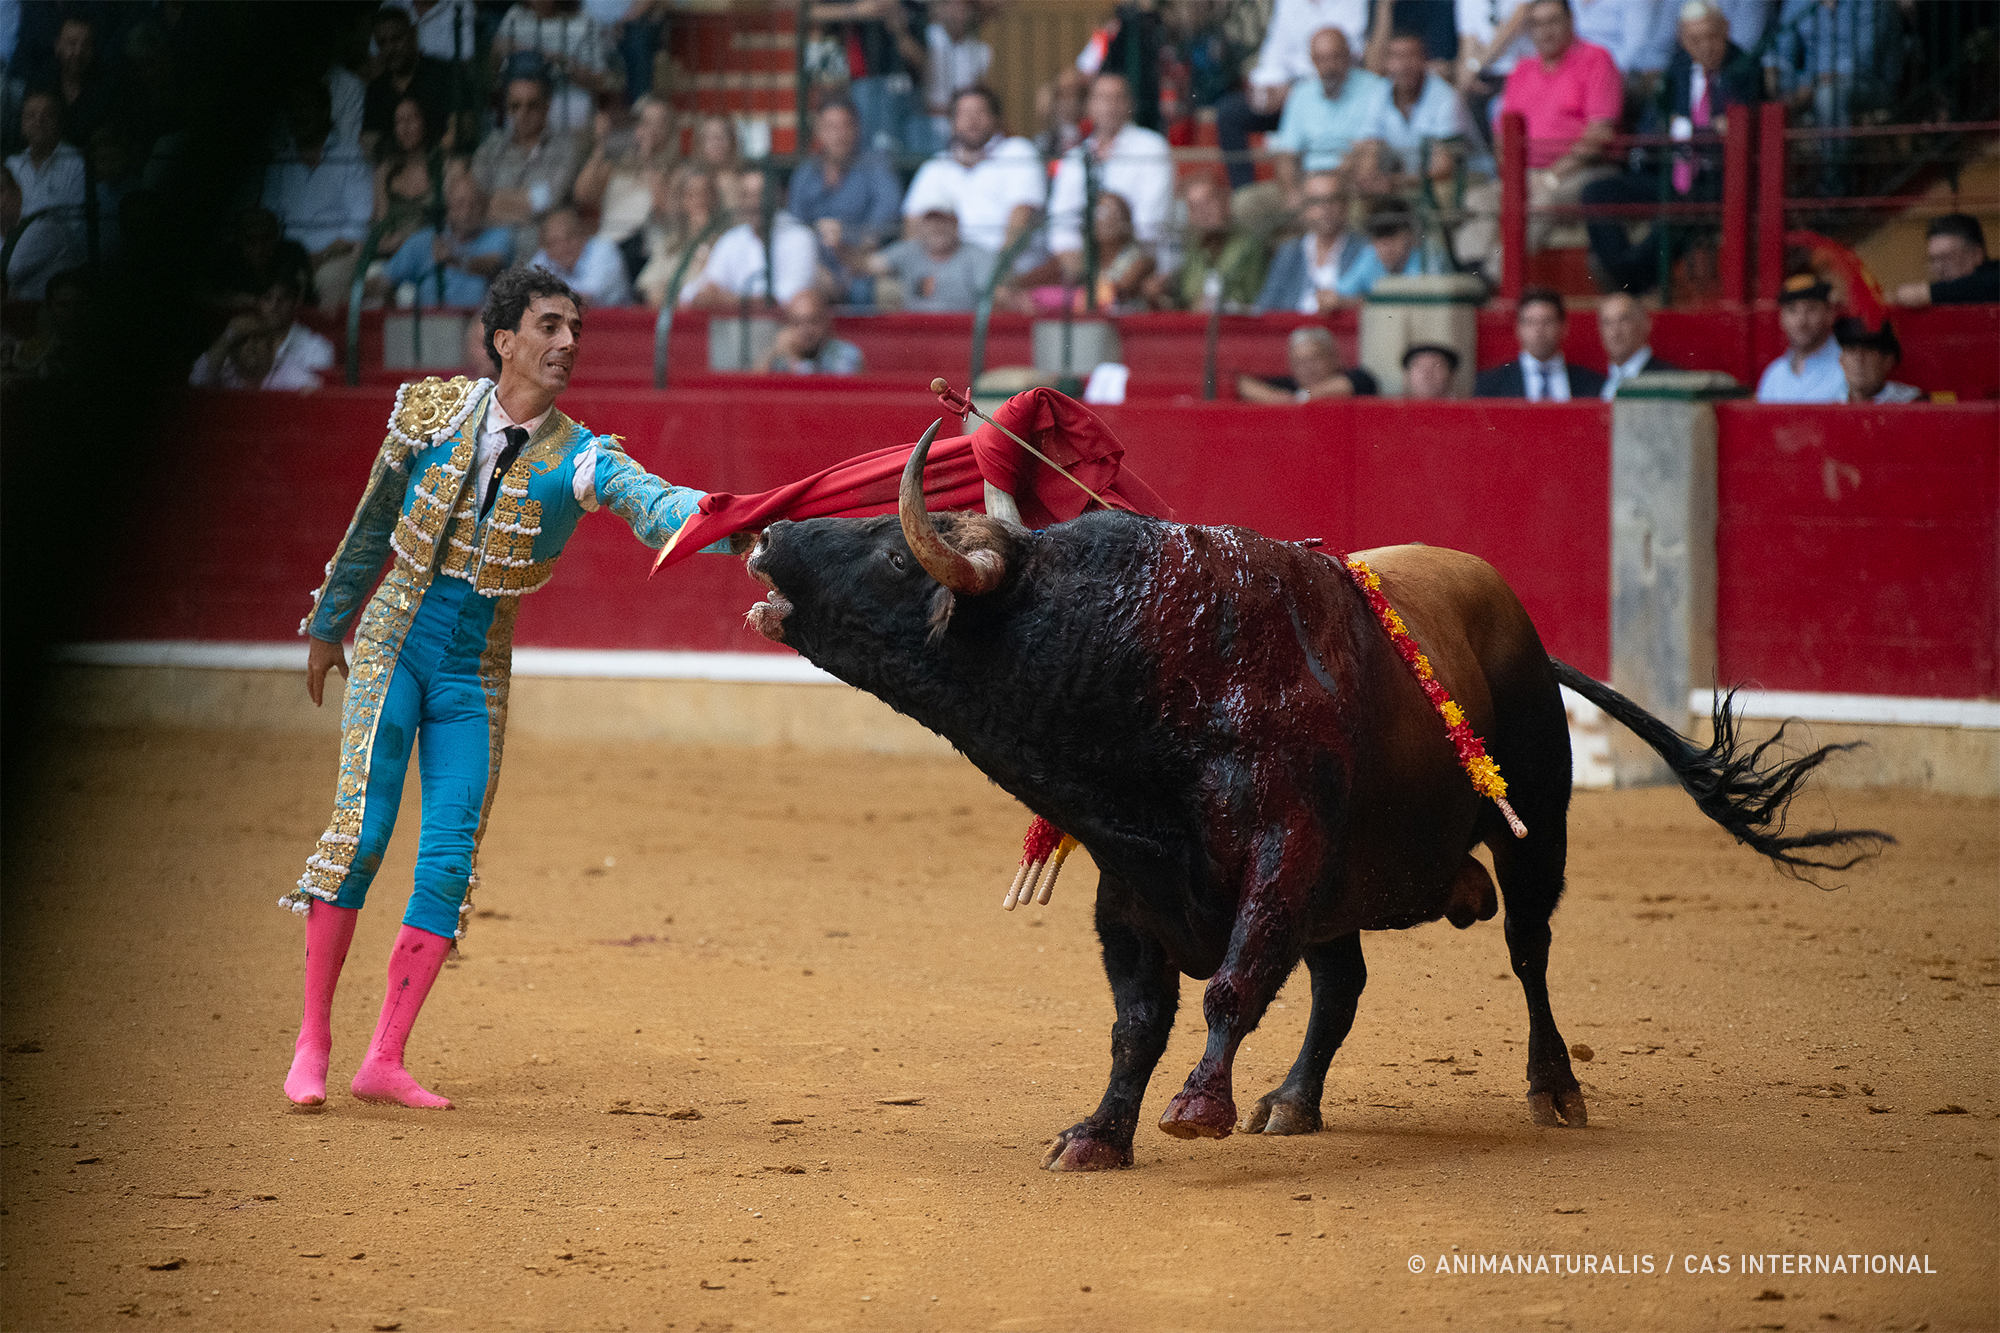 La feria taurina de Zaragoza llega a su fin tras cobrarse la vida de 60 toros